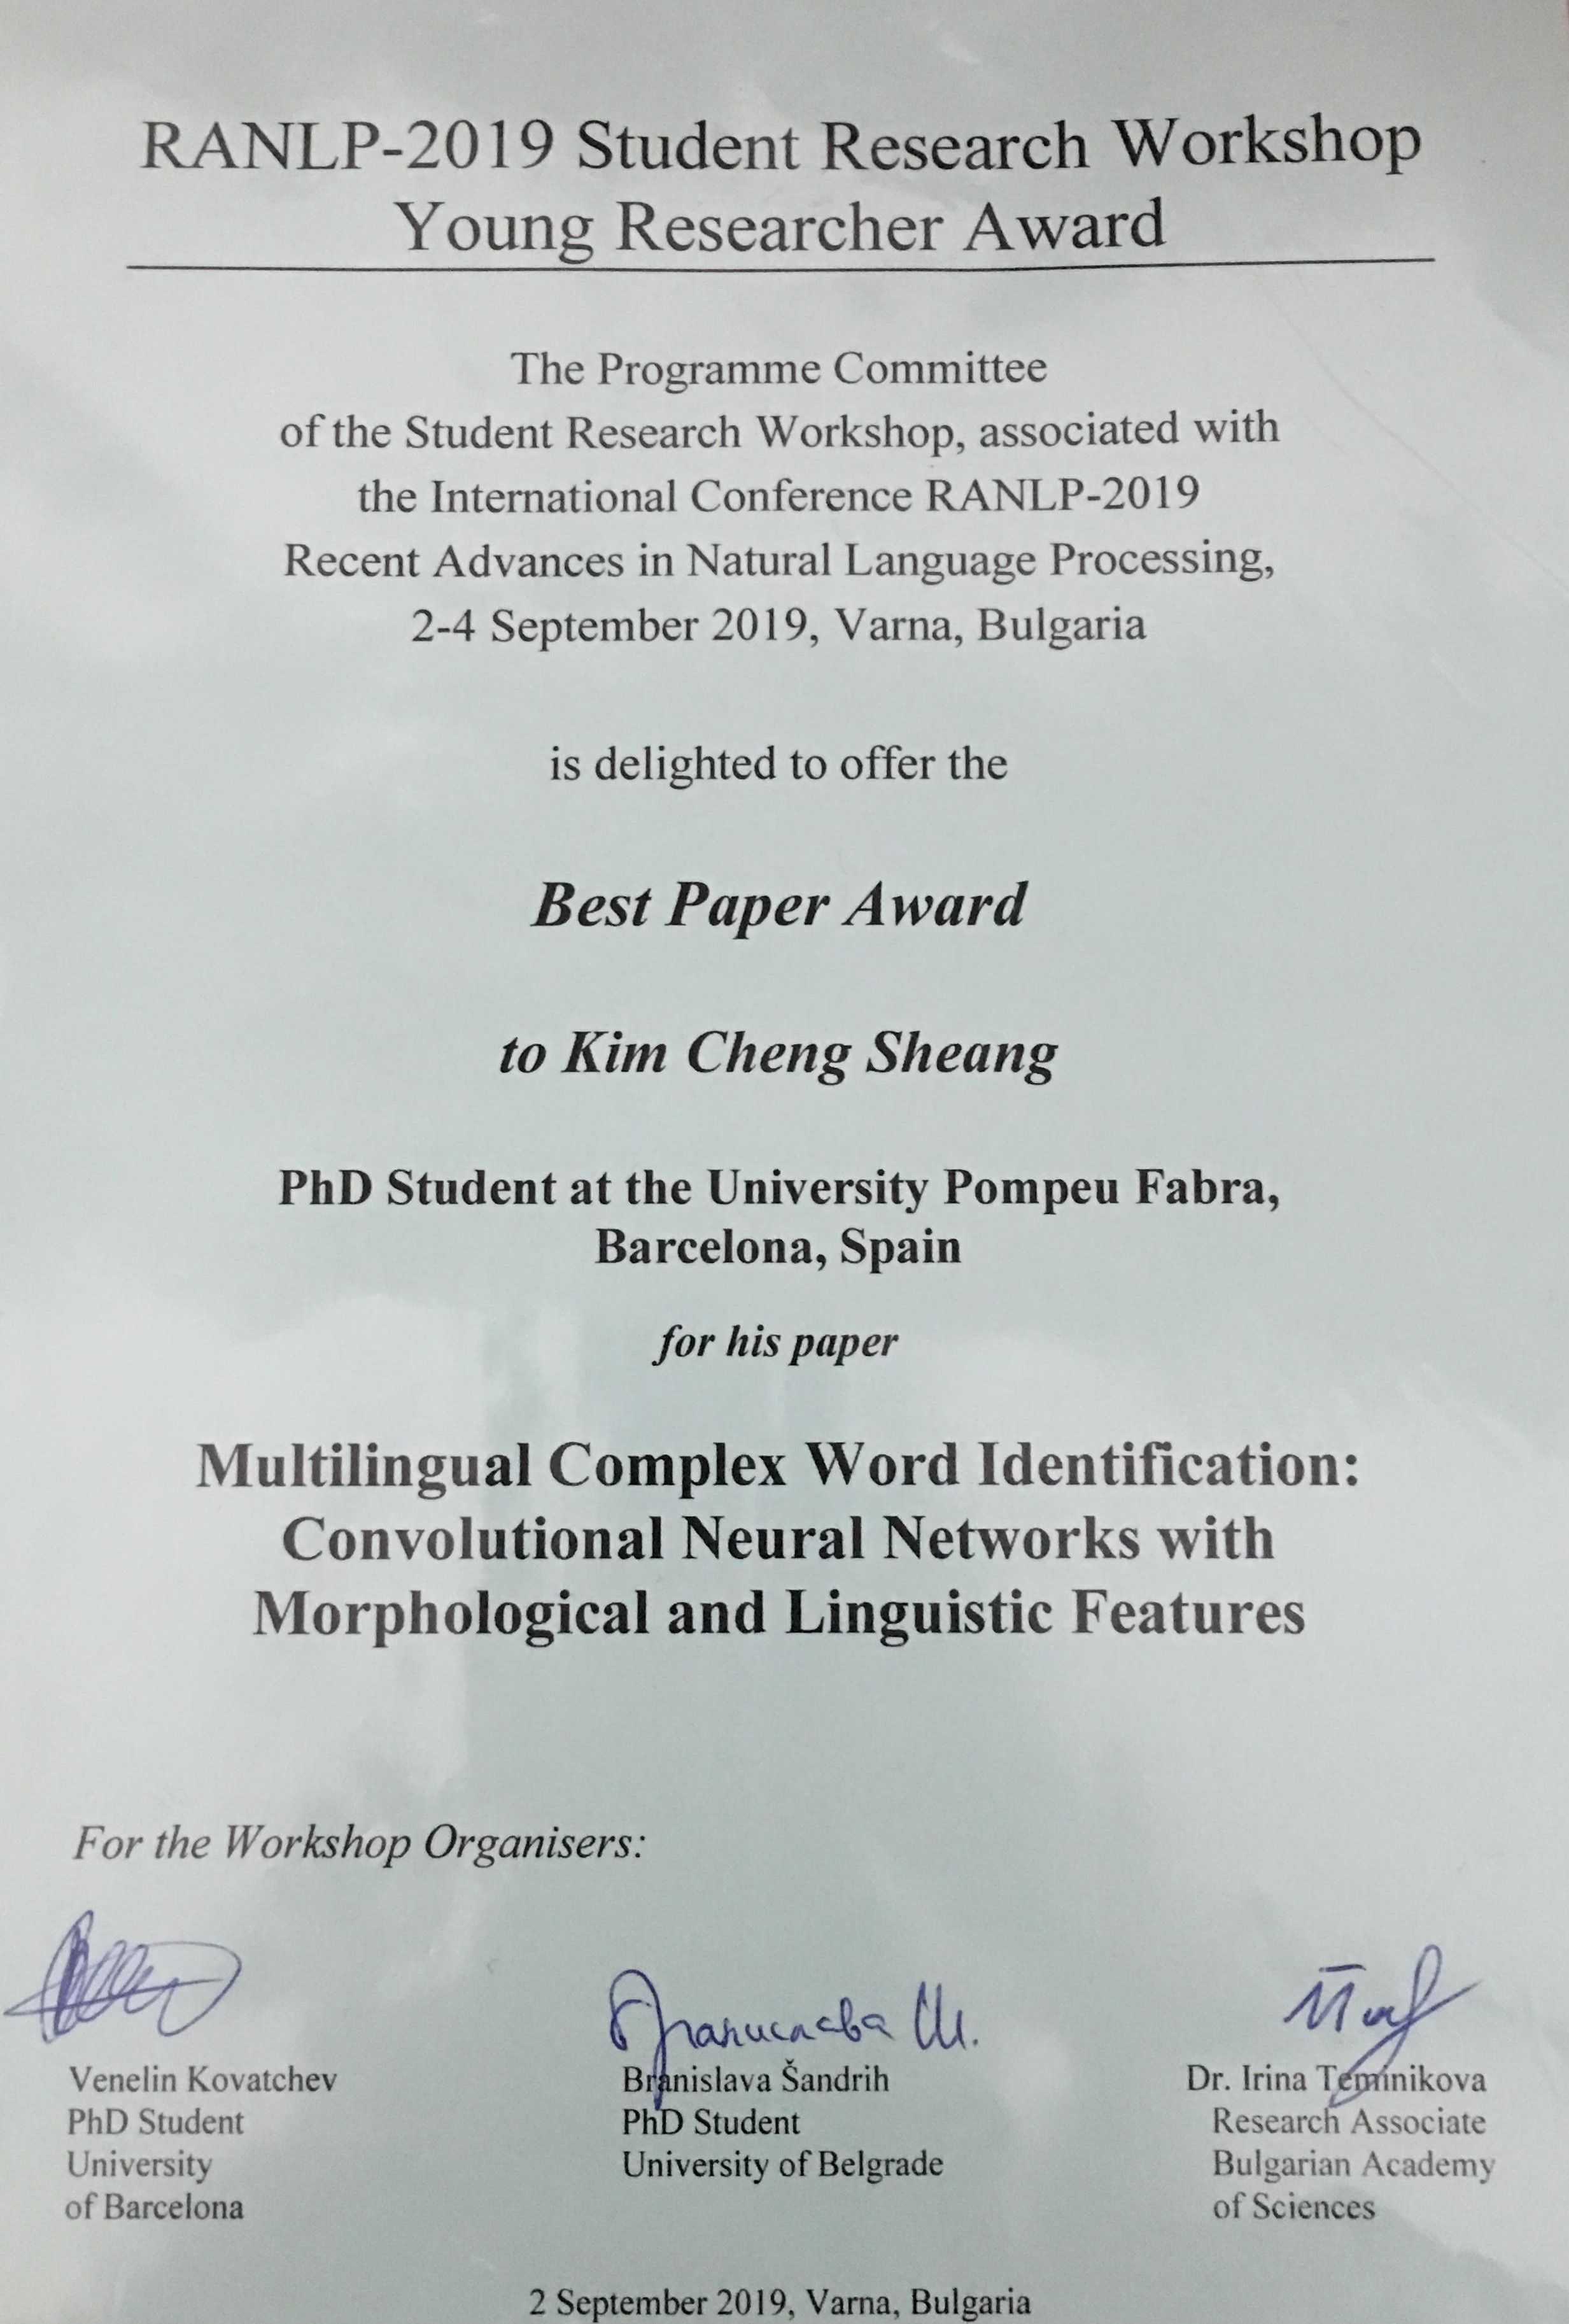 Best paper award at RANLP 2019